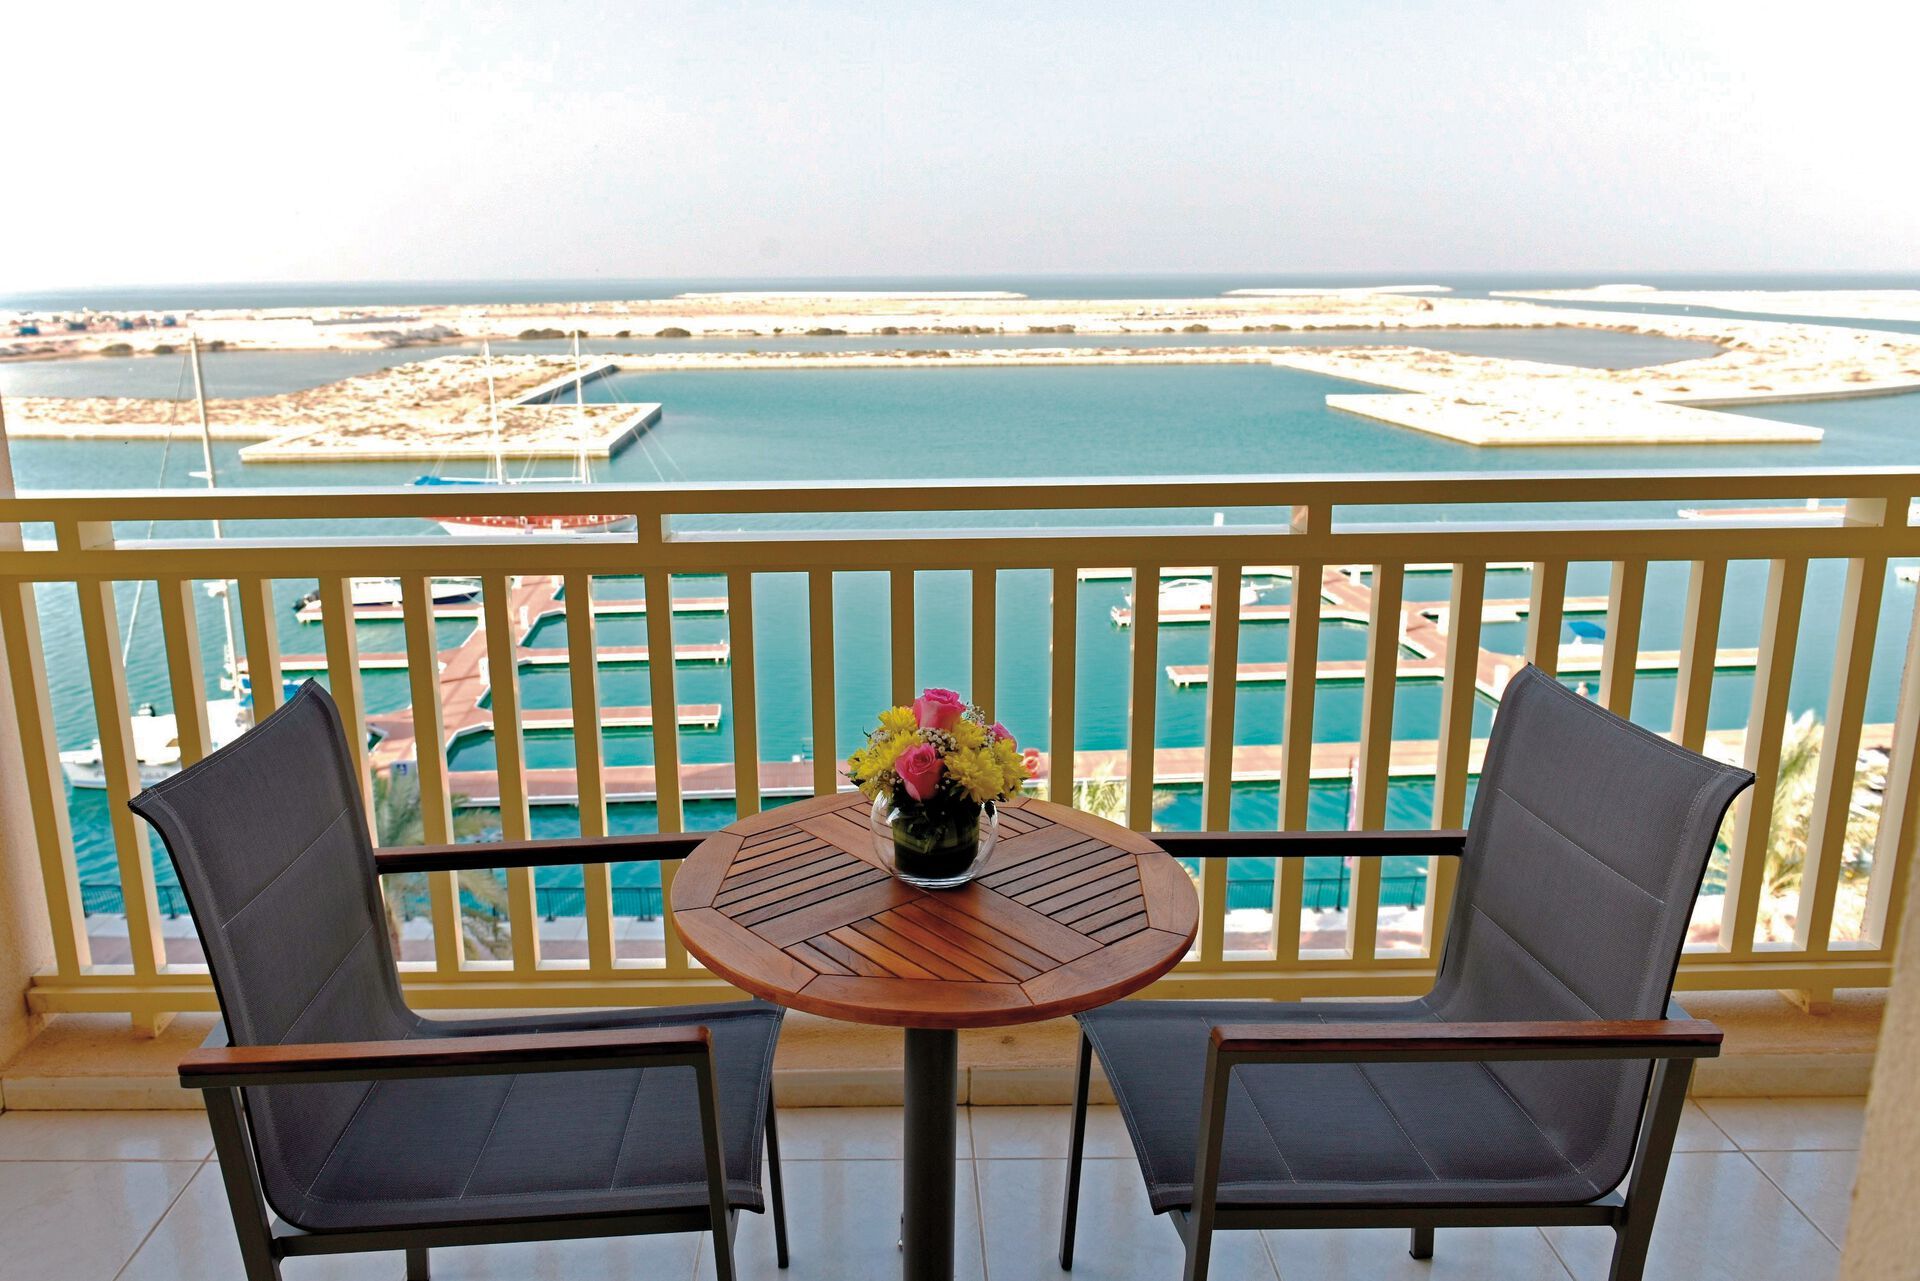 Emirats Arabes Unis - Ras Al Khaimah - Jannah Hôtel Apartments and Villas 4*